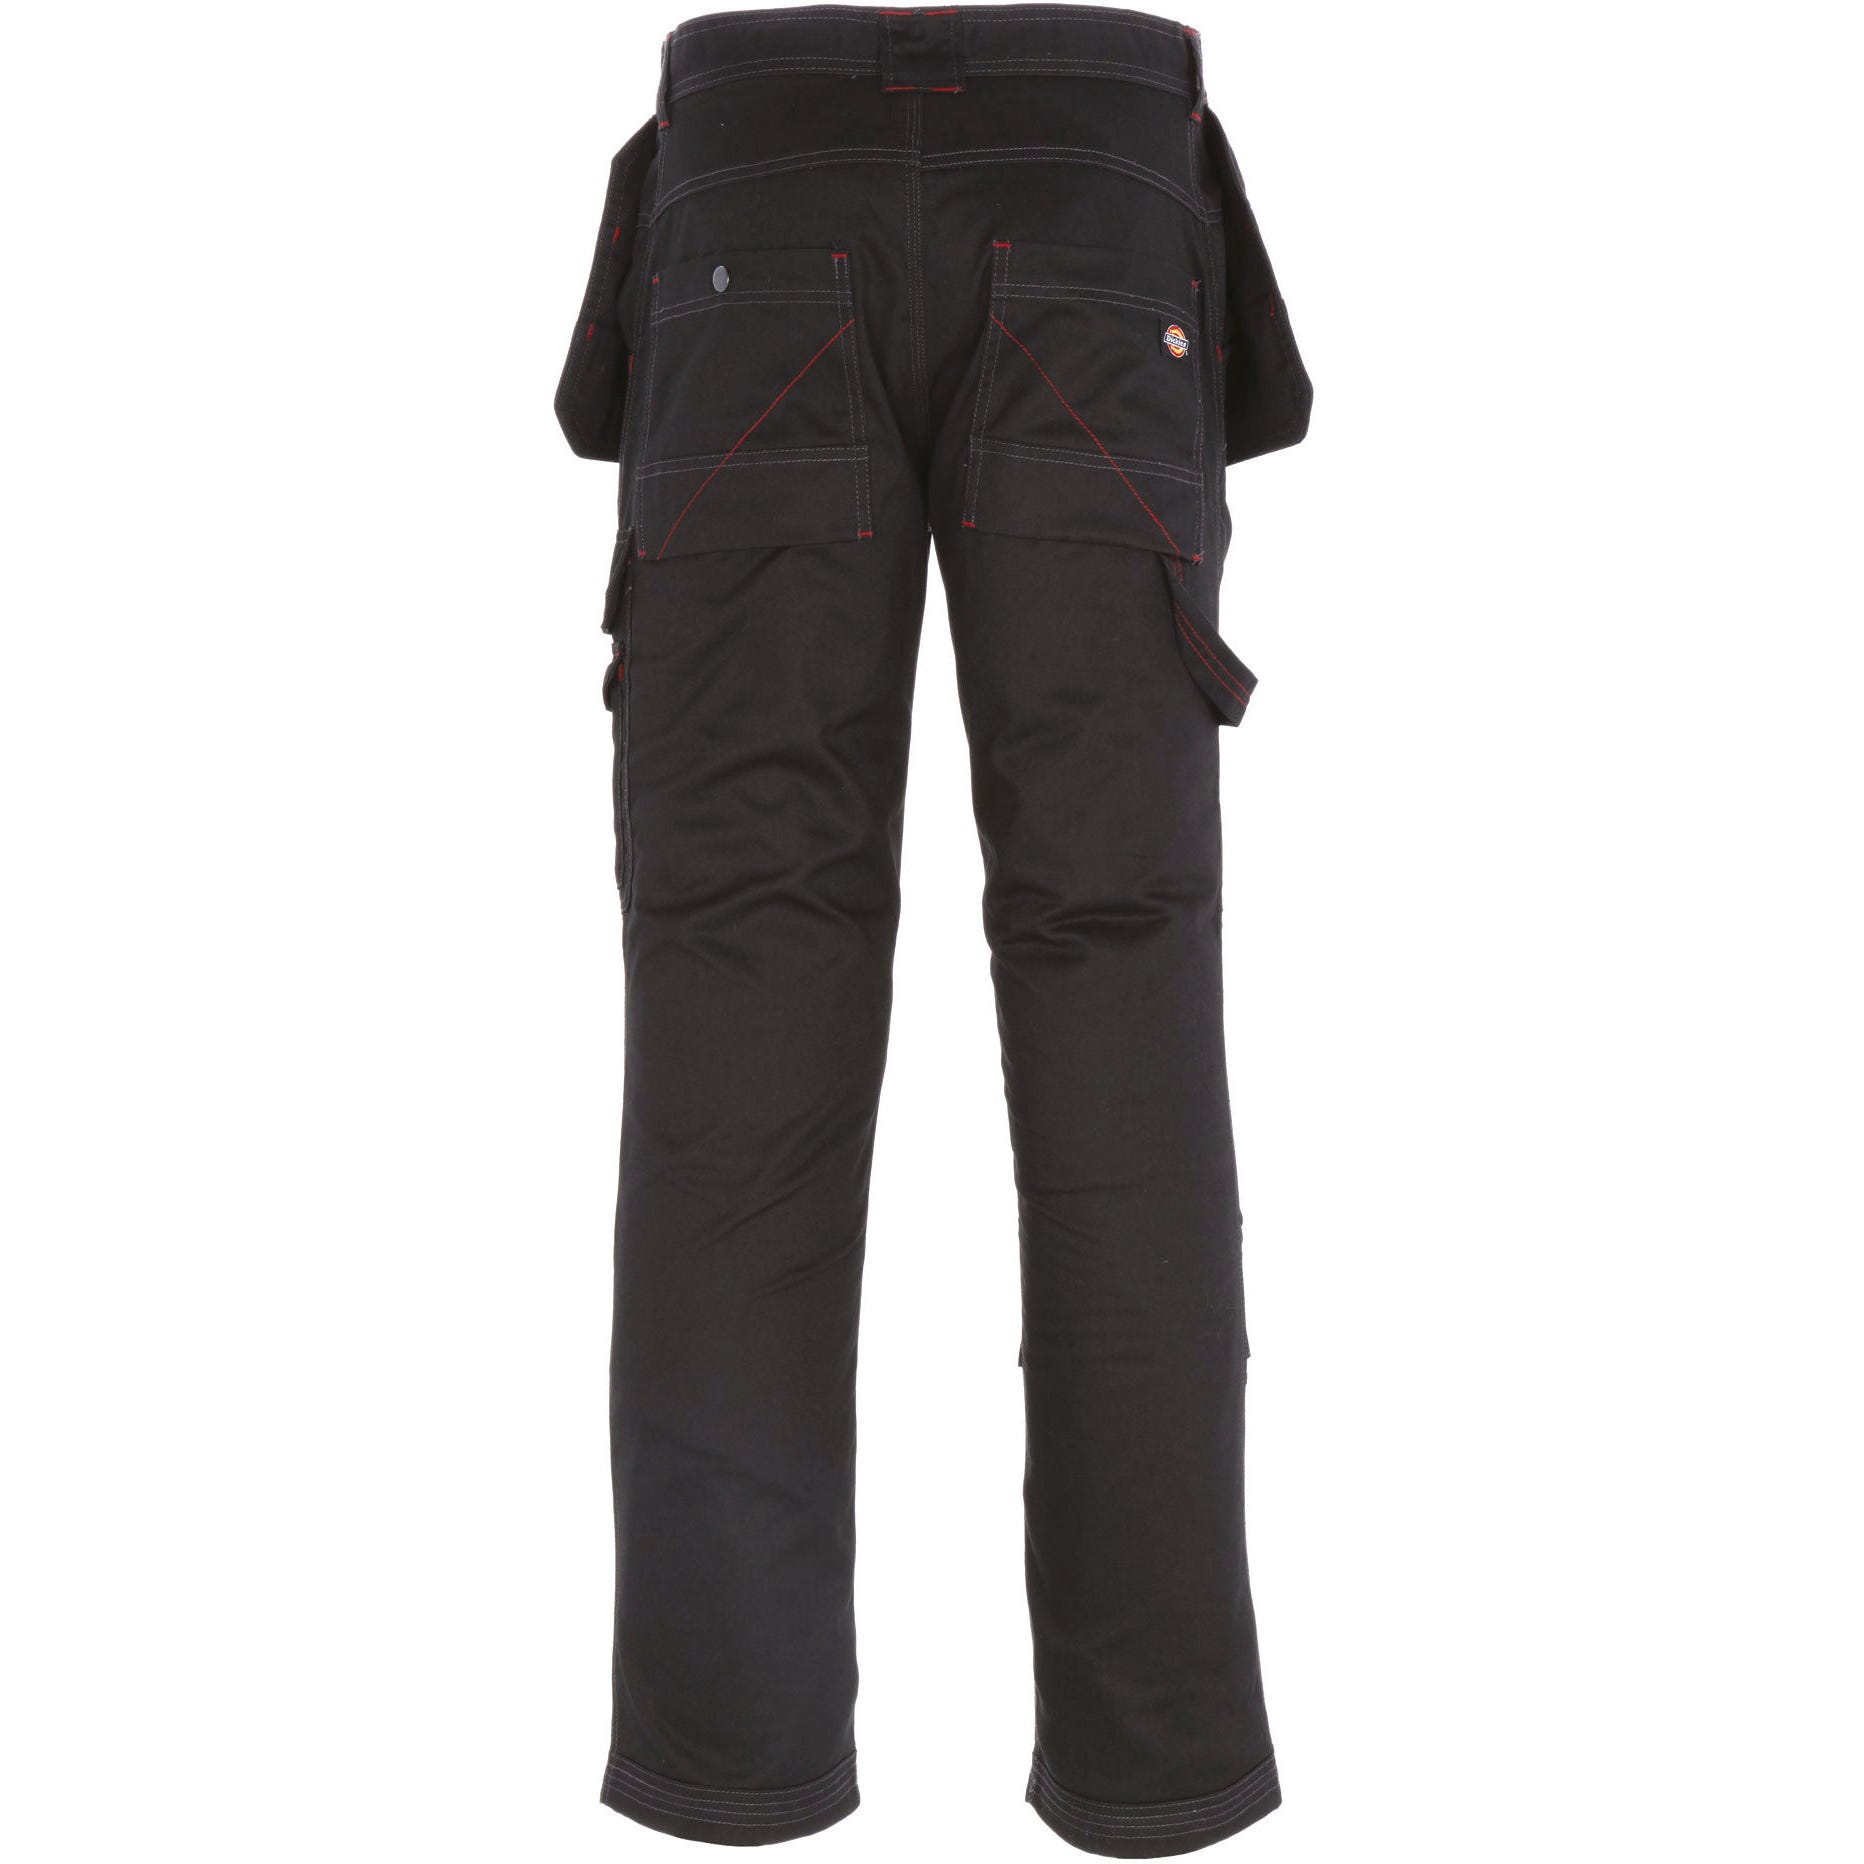 Pantalon Redhawk Pro Noir - Dickies - Taille 38 5